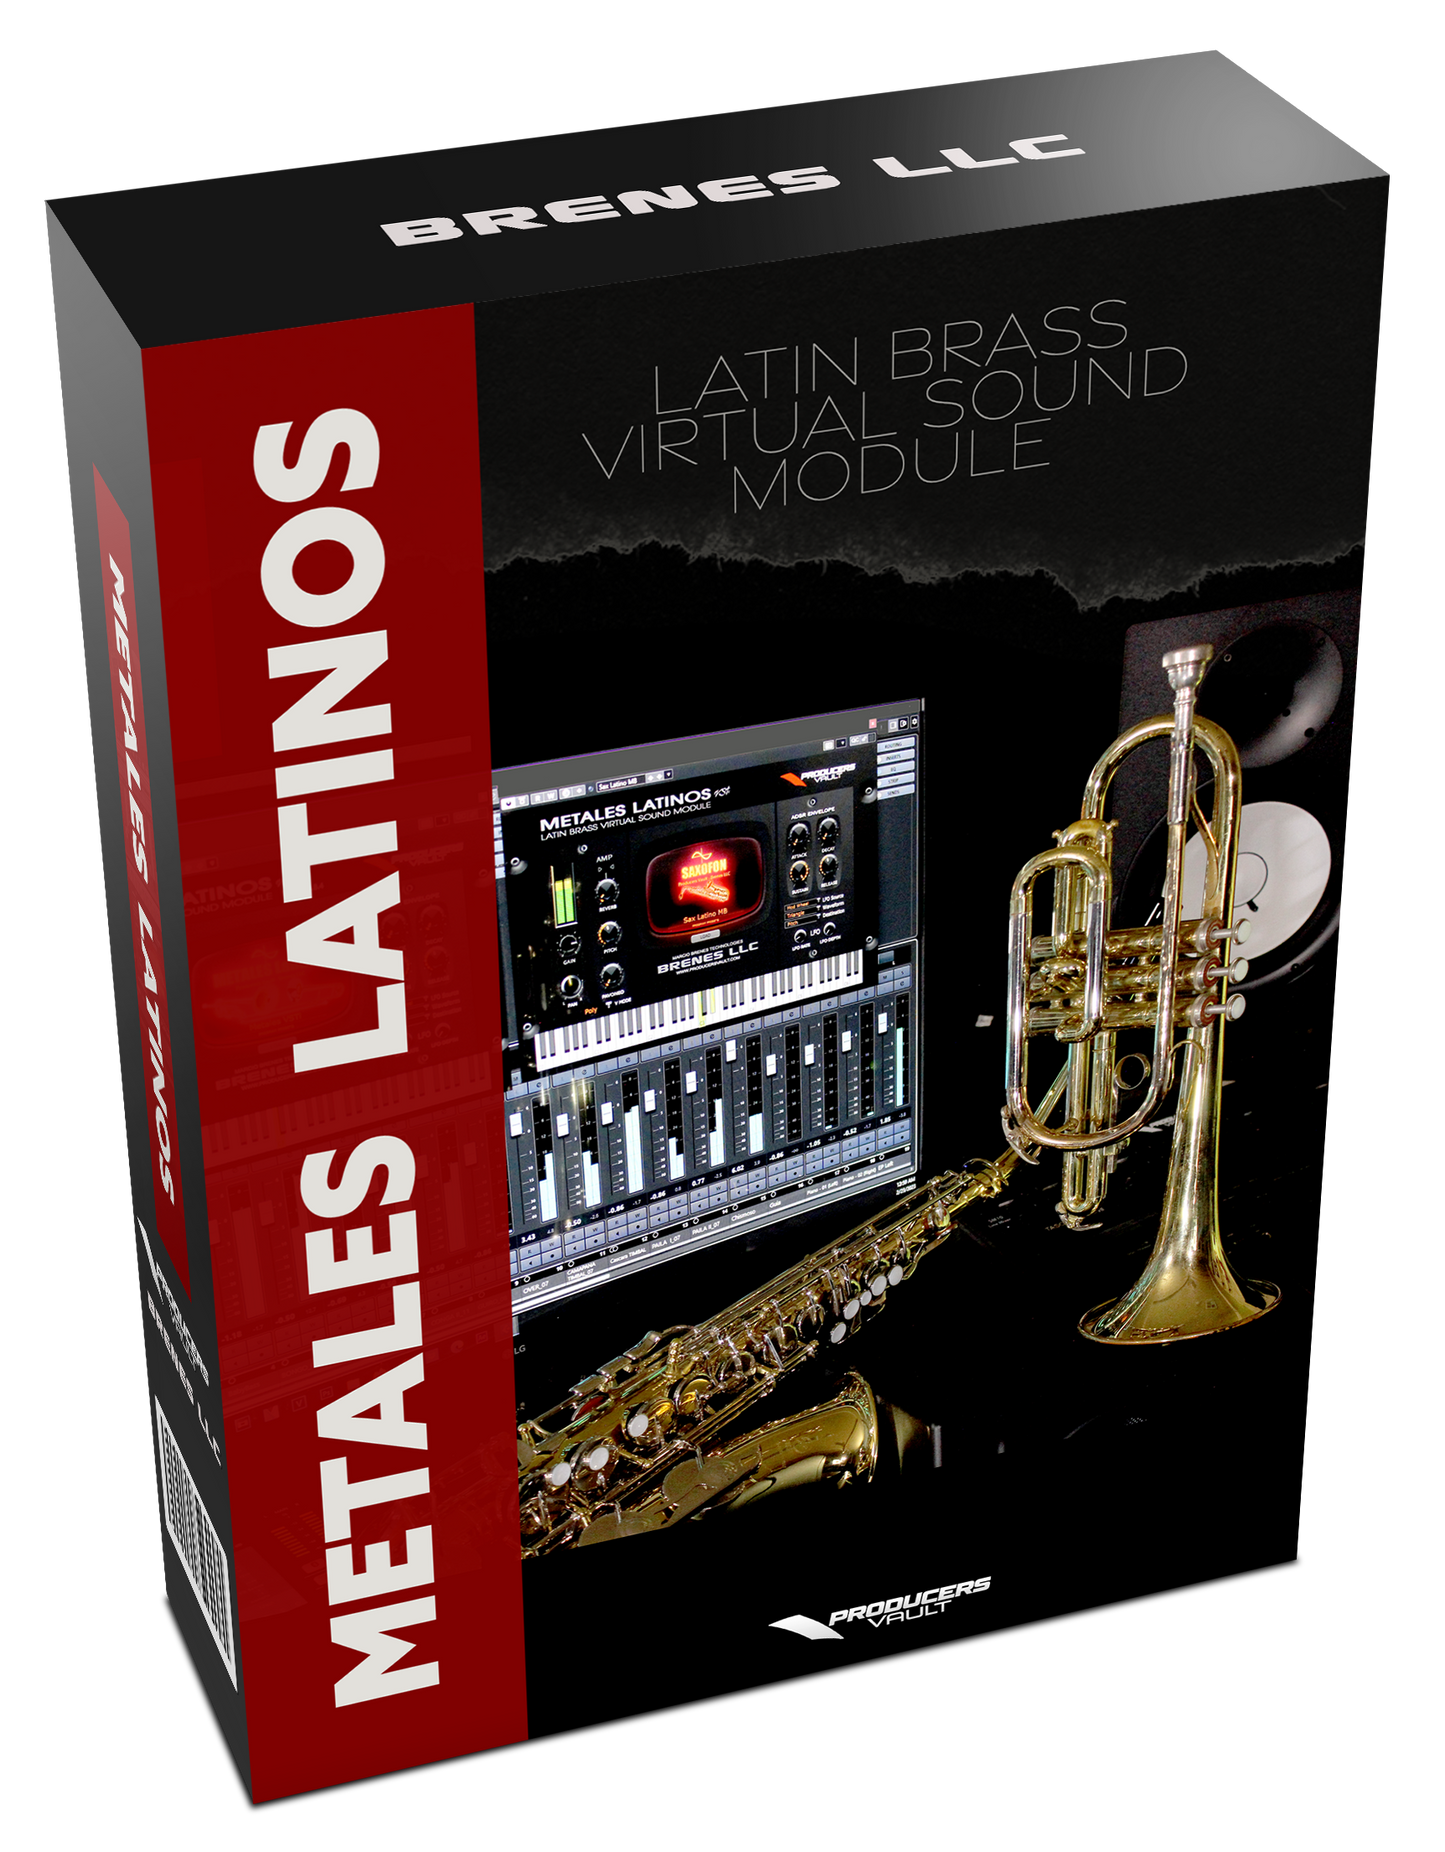 Metales Latinos VSTi 2.8.4 Latin Brass Virtual Sound Module for MAC OS